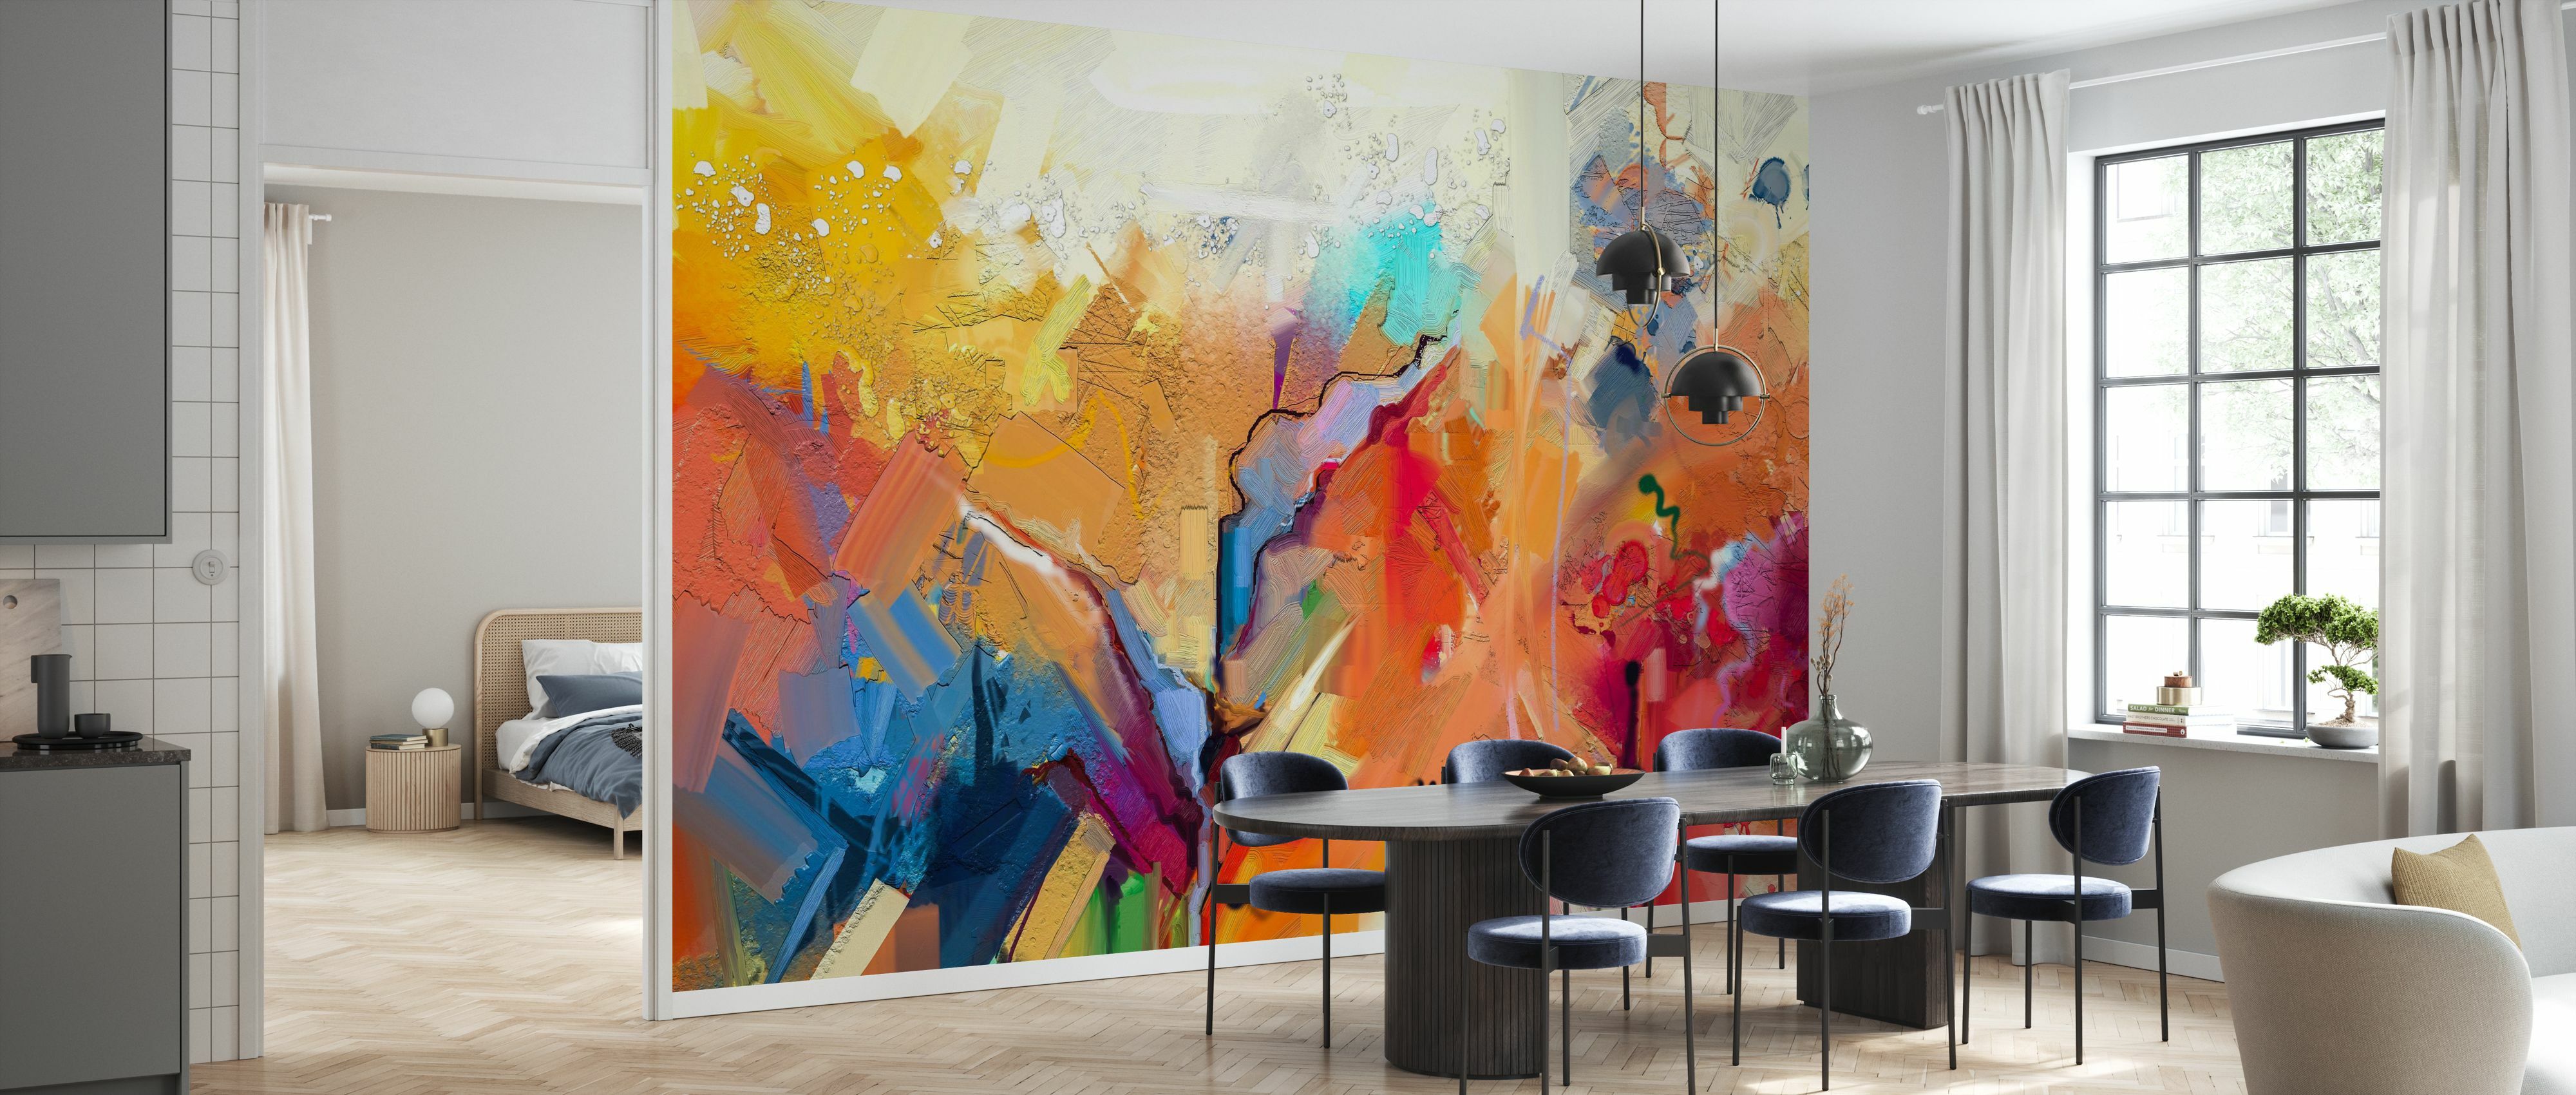 Modern Wall Art Decor: A Splash Of Colorful Creativity